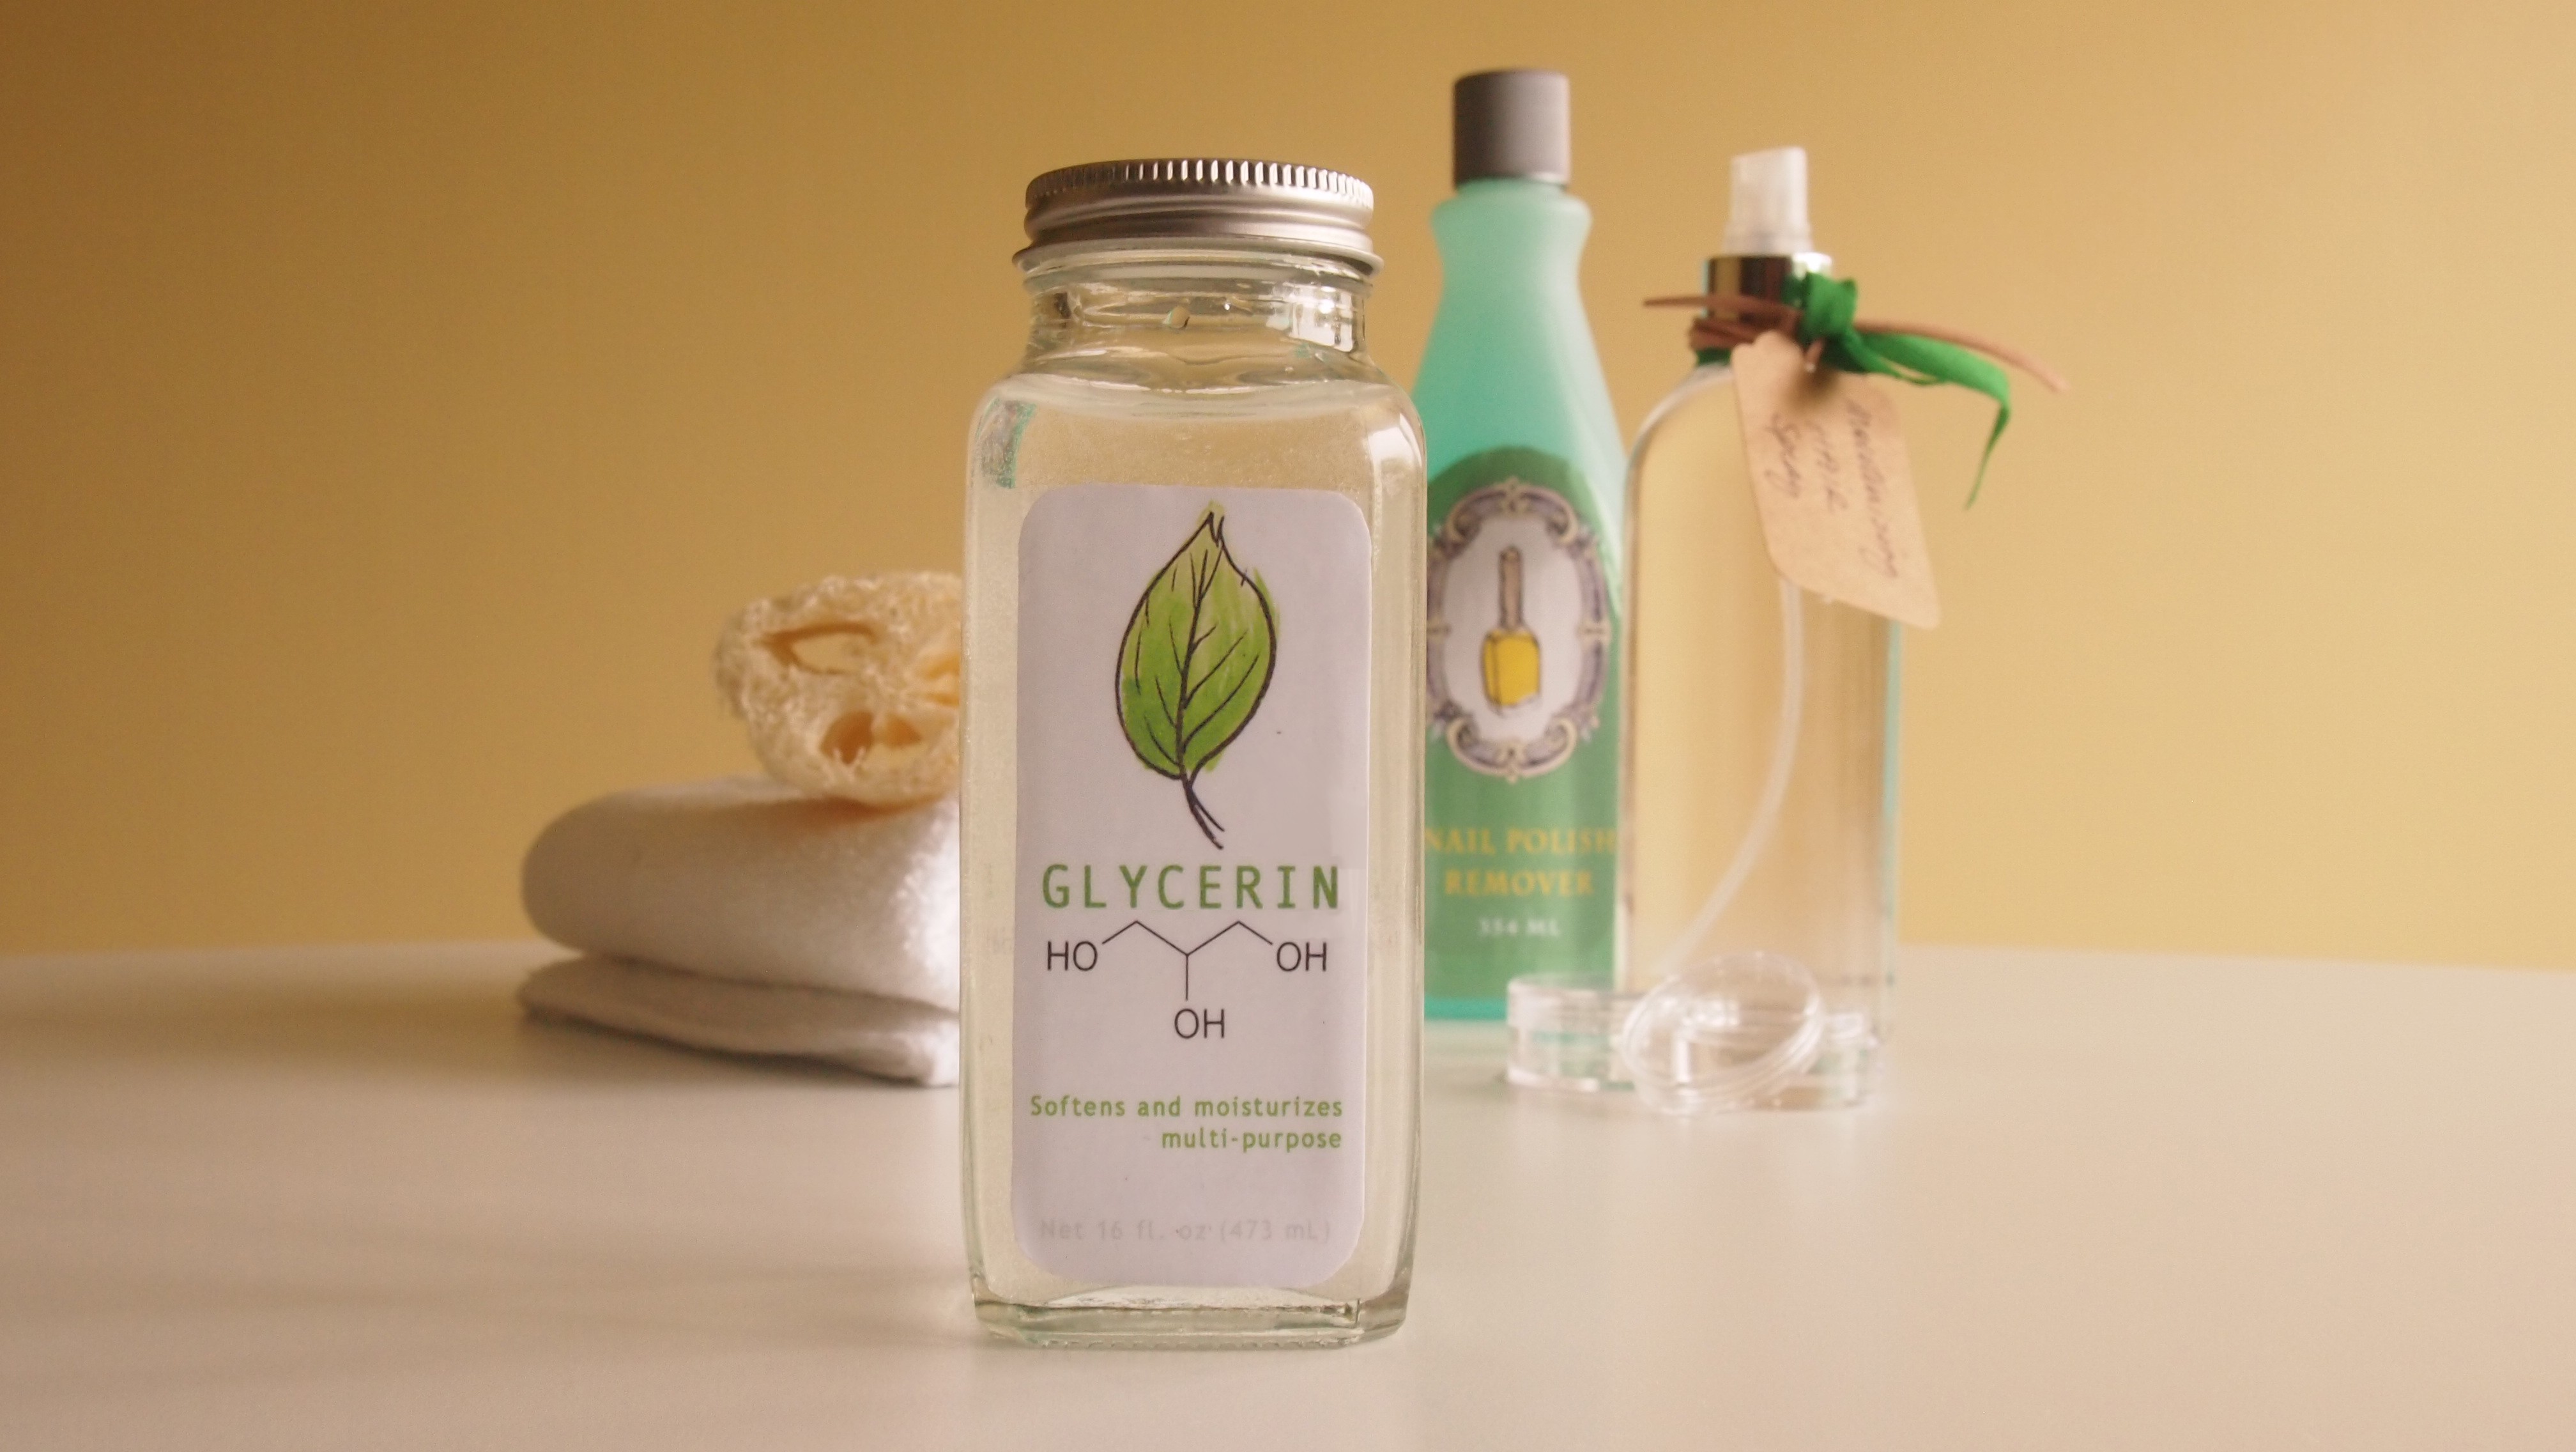 Glycerin Soap Making Supplies, Base Home Soap Making